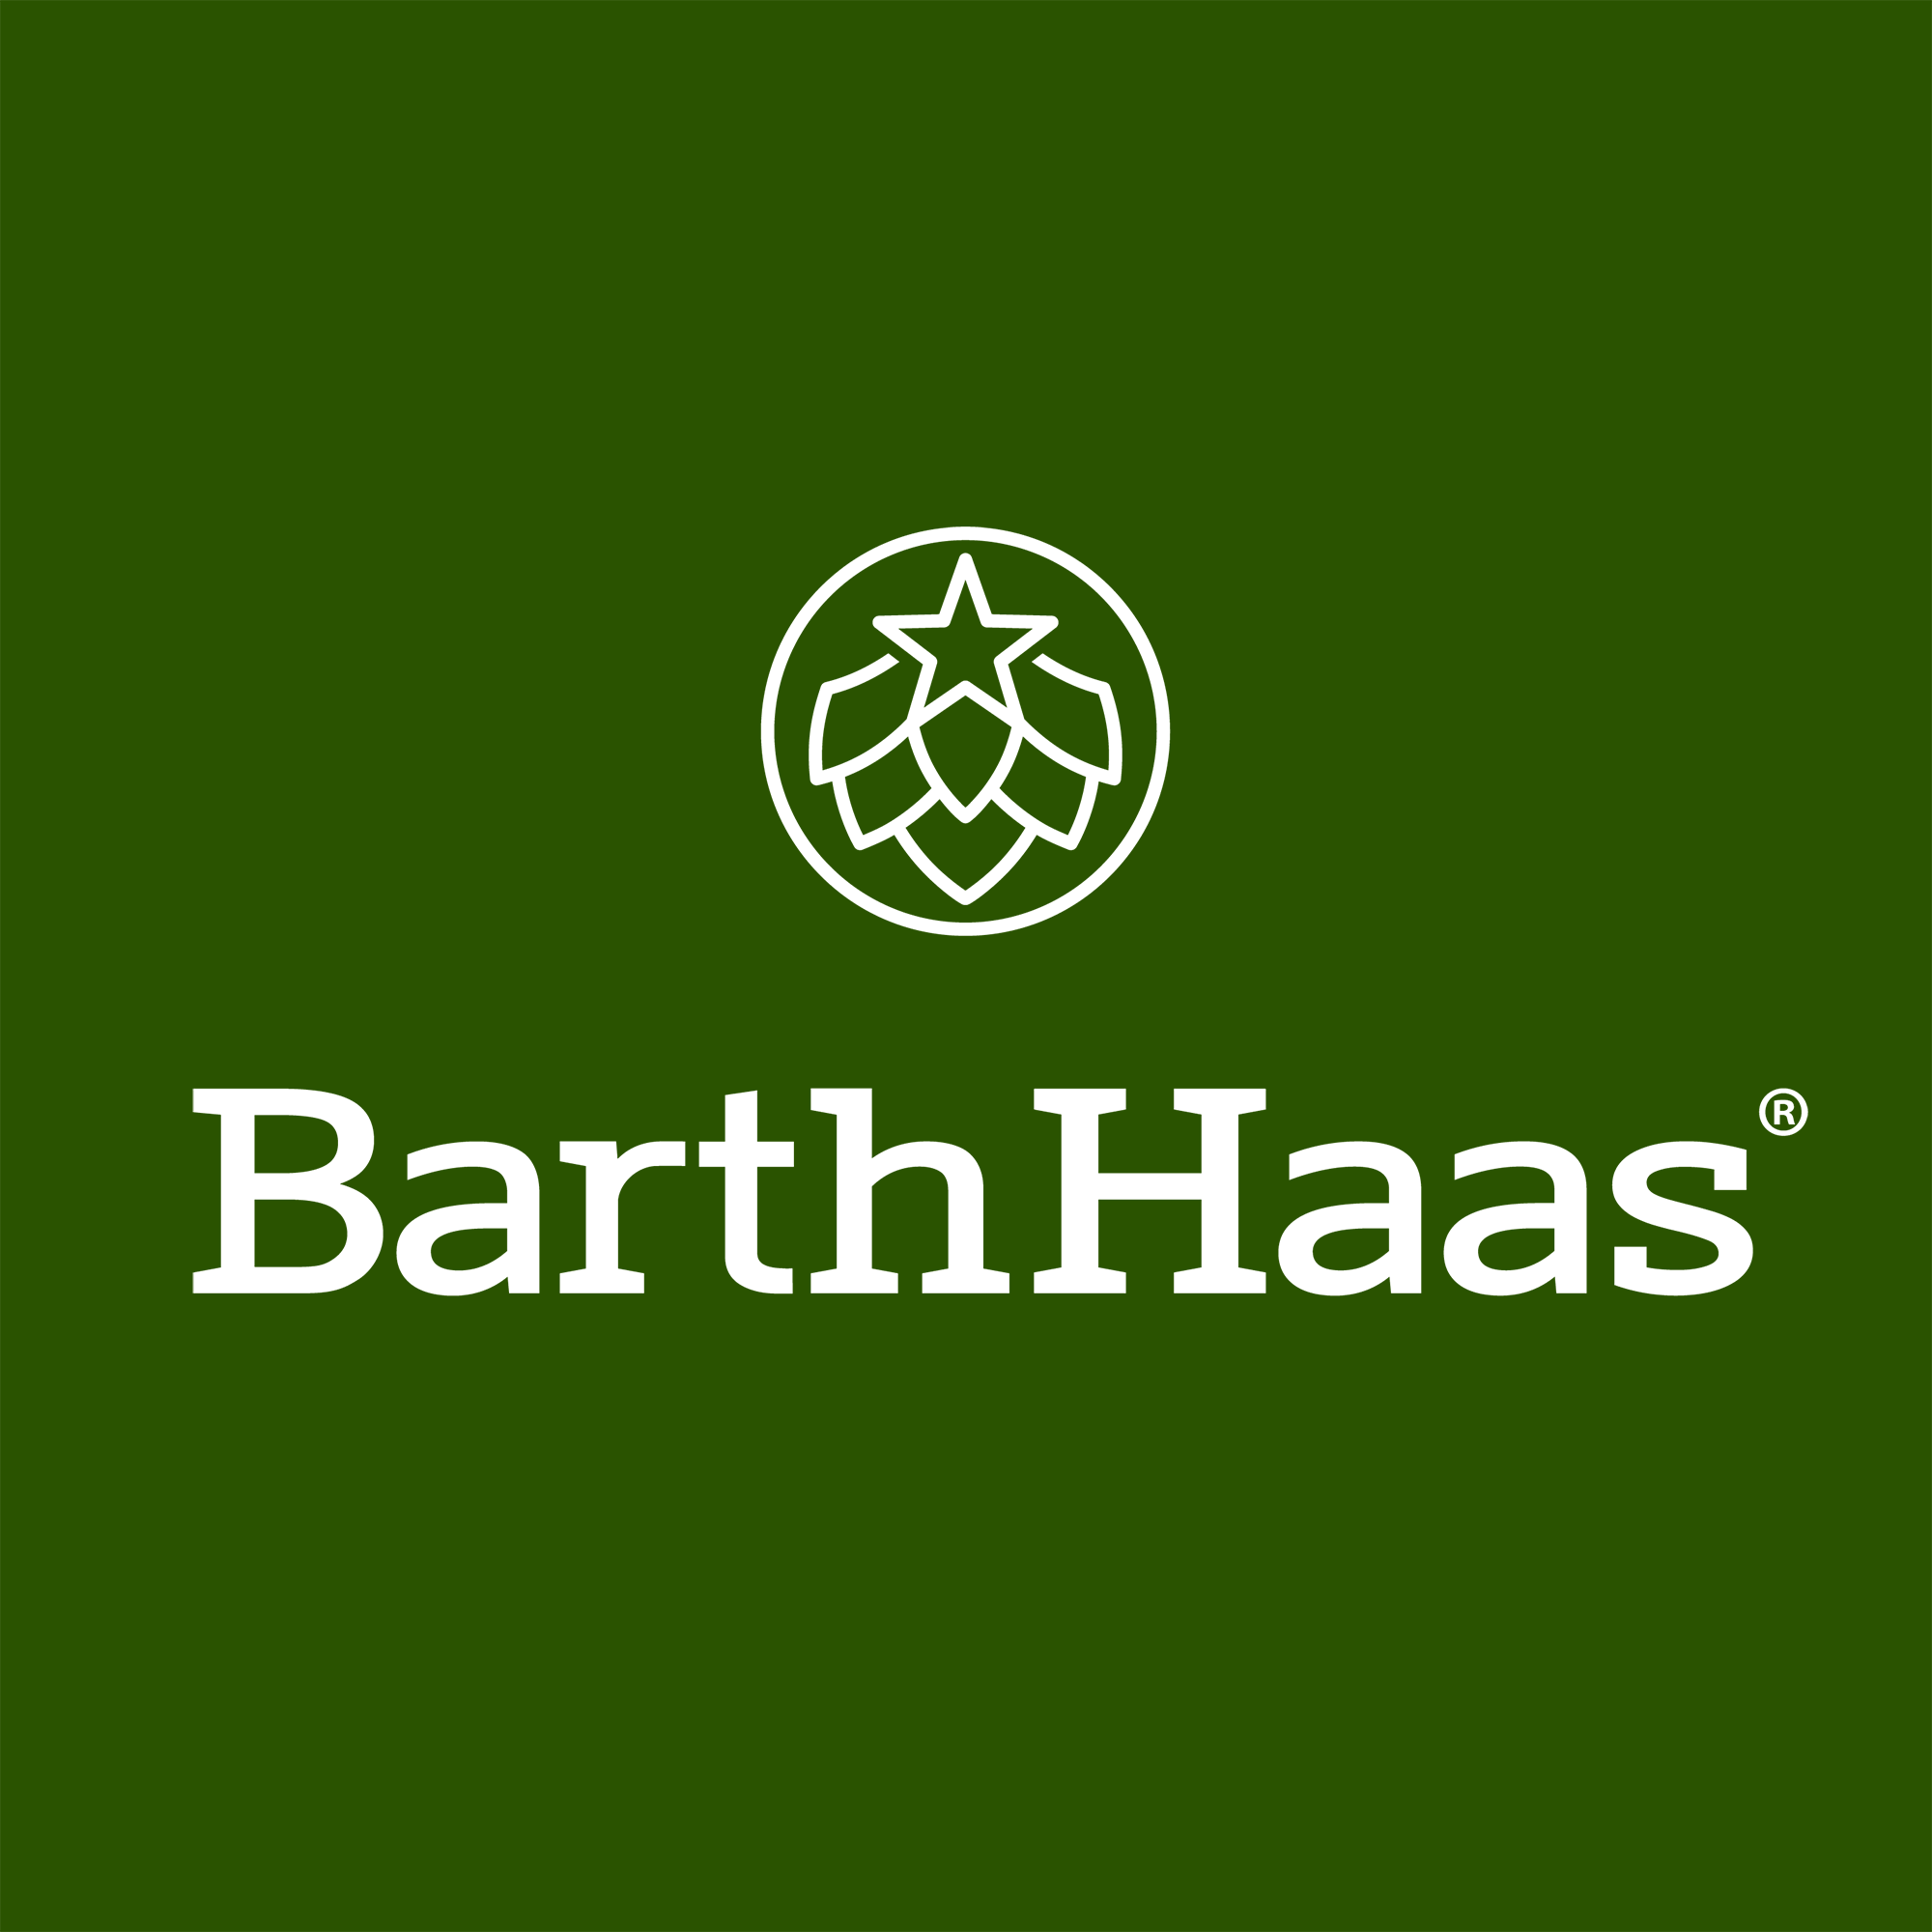 BarthHaas